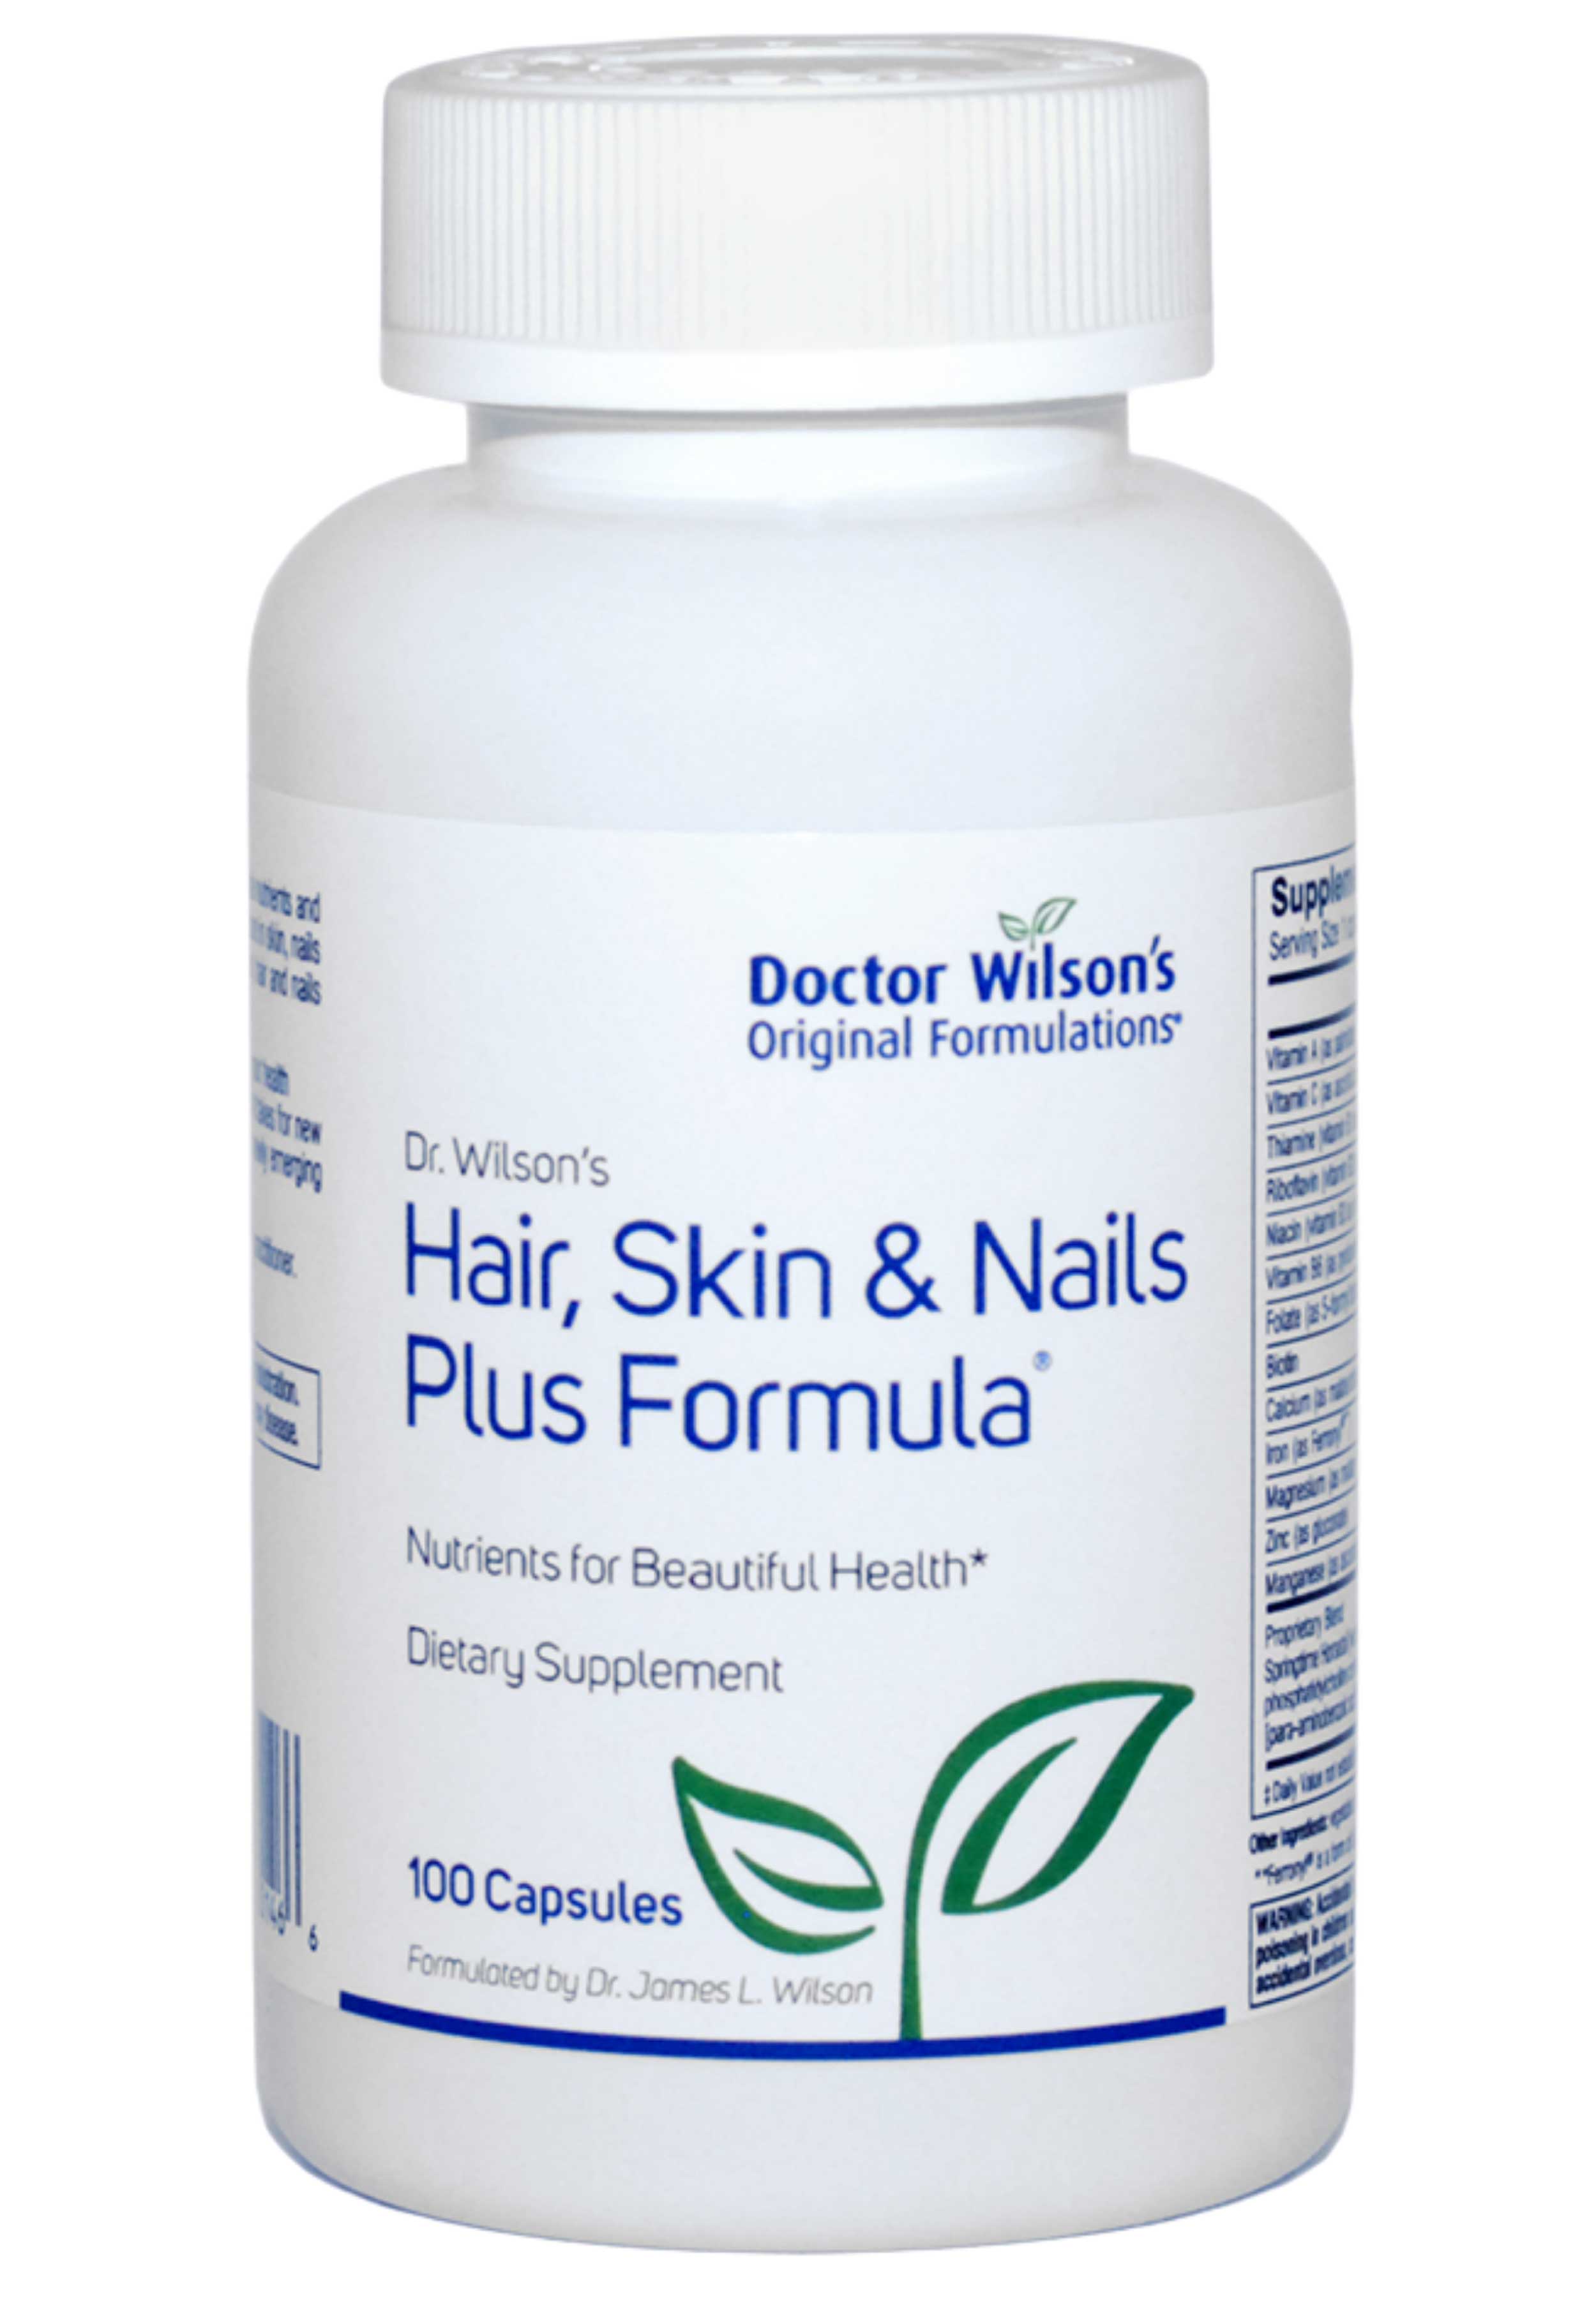 Doctor Wilson's Original Formulations Hair, Skin & Nails Plus Formula